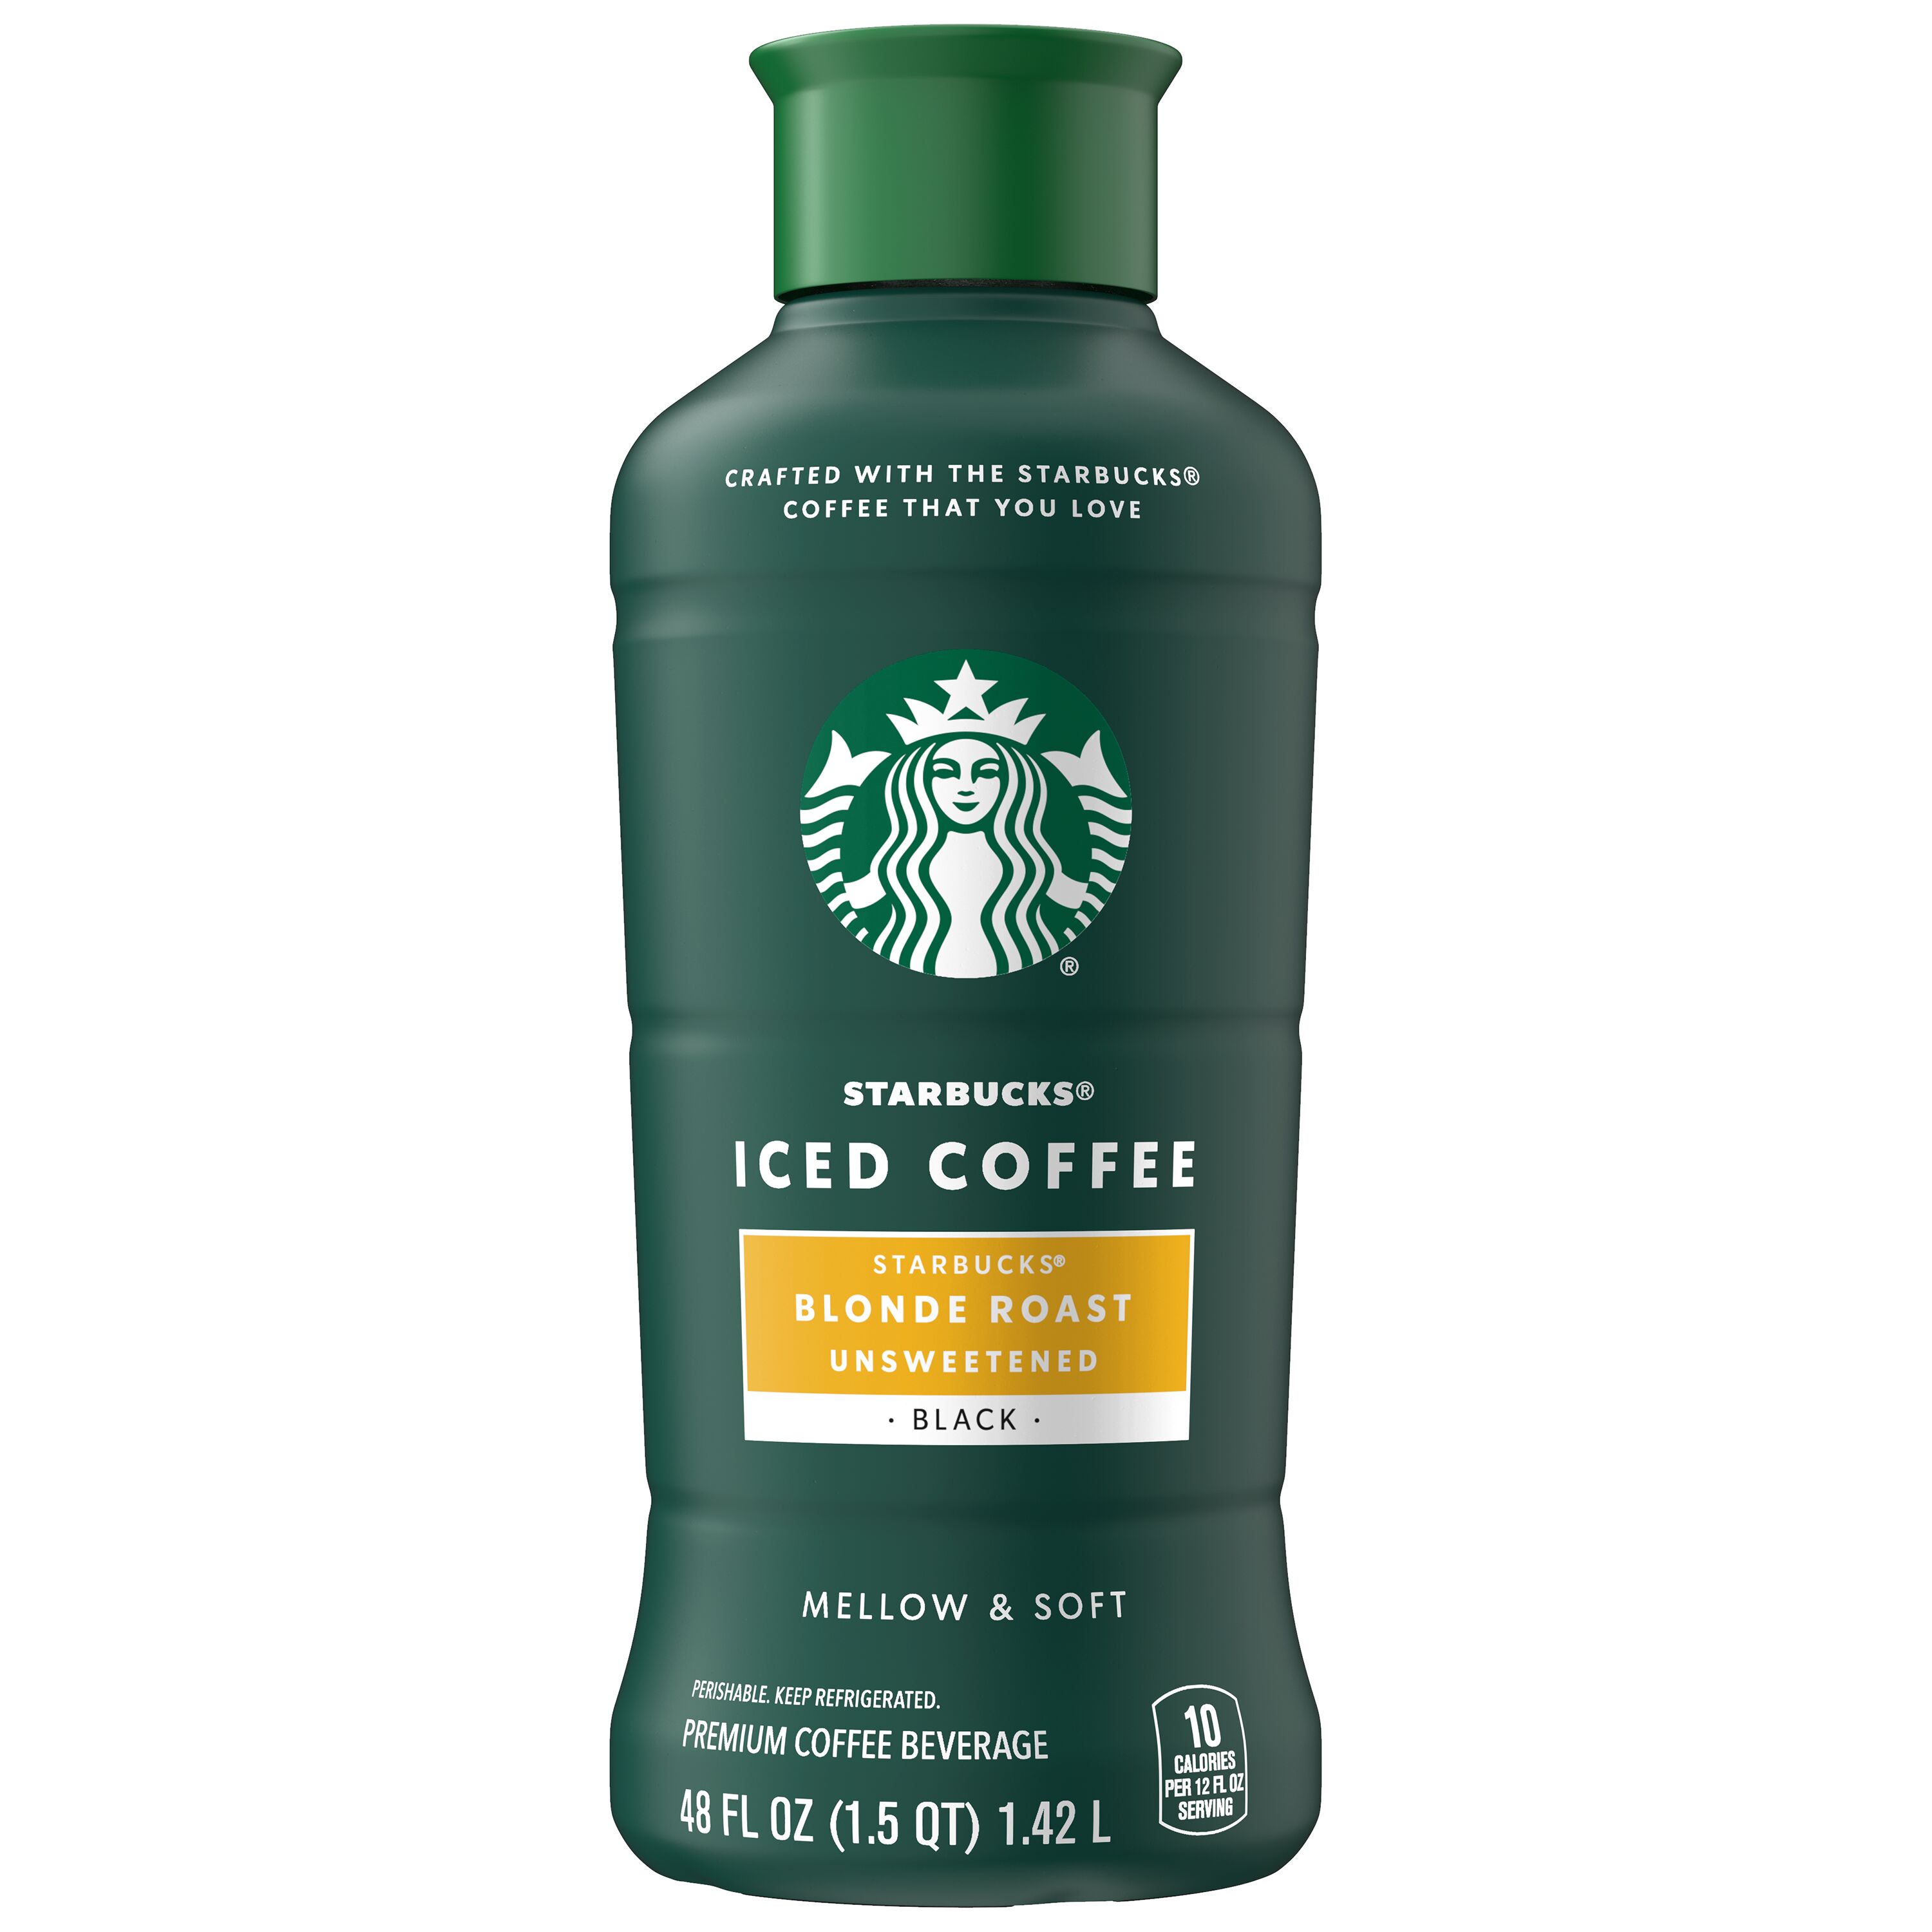 Starbucks Iced Coffee Premium Coffee Beverage Unsweetened Blonde Roast 48 fl oz Bottle - image 1 of 6